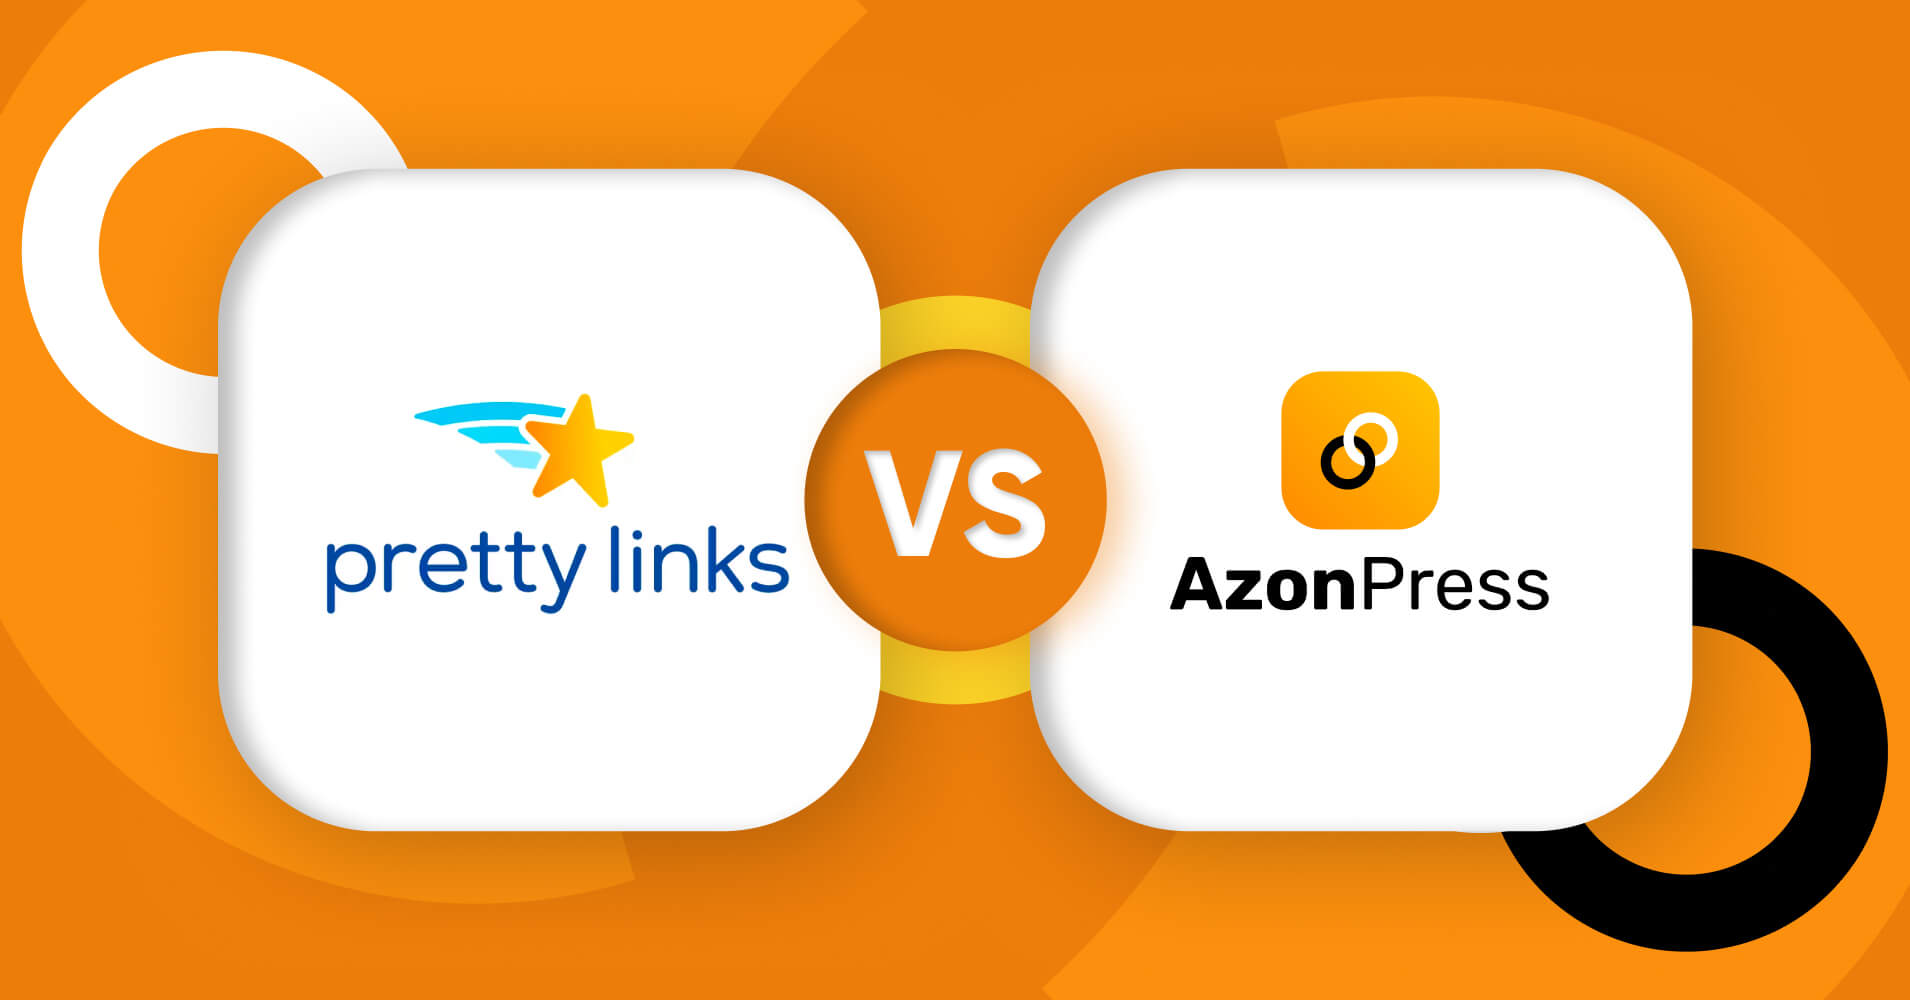 Pretty links vs AzonPress